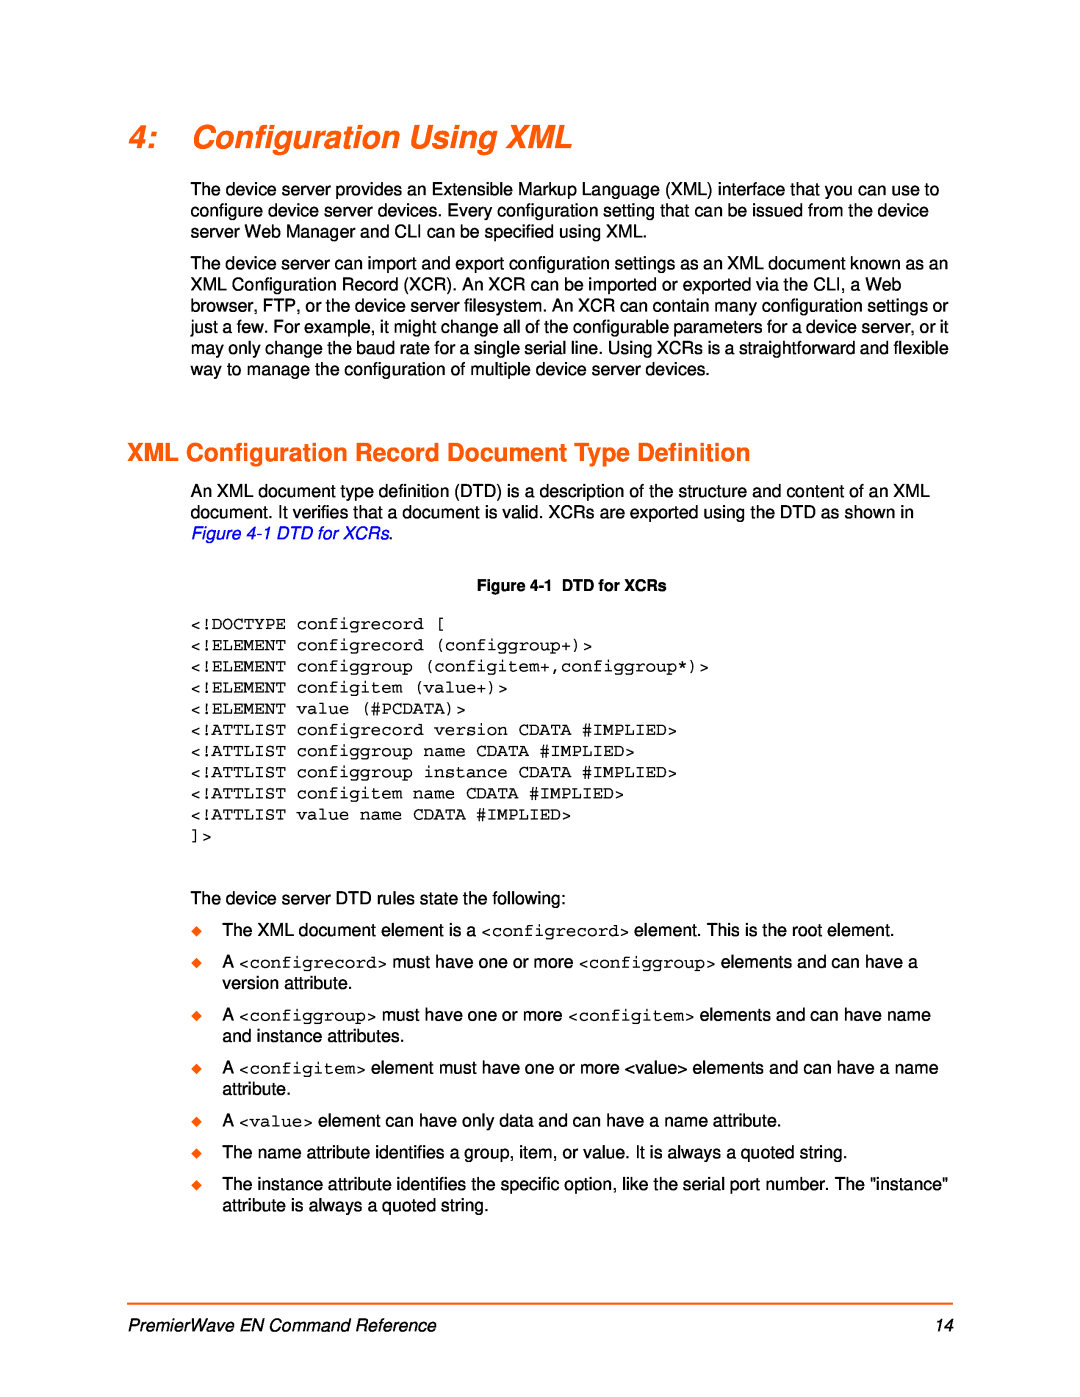 Lantronix 900-581 manual Configuration Using XML, XML Configuration Record Document Type Definition 